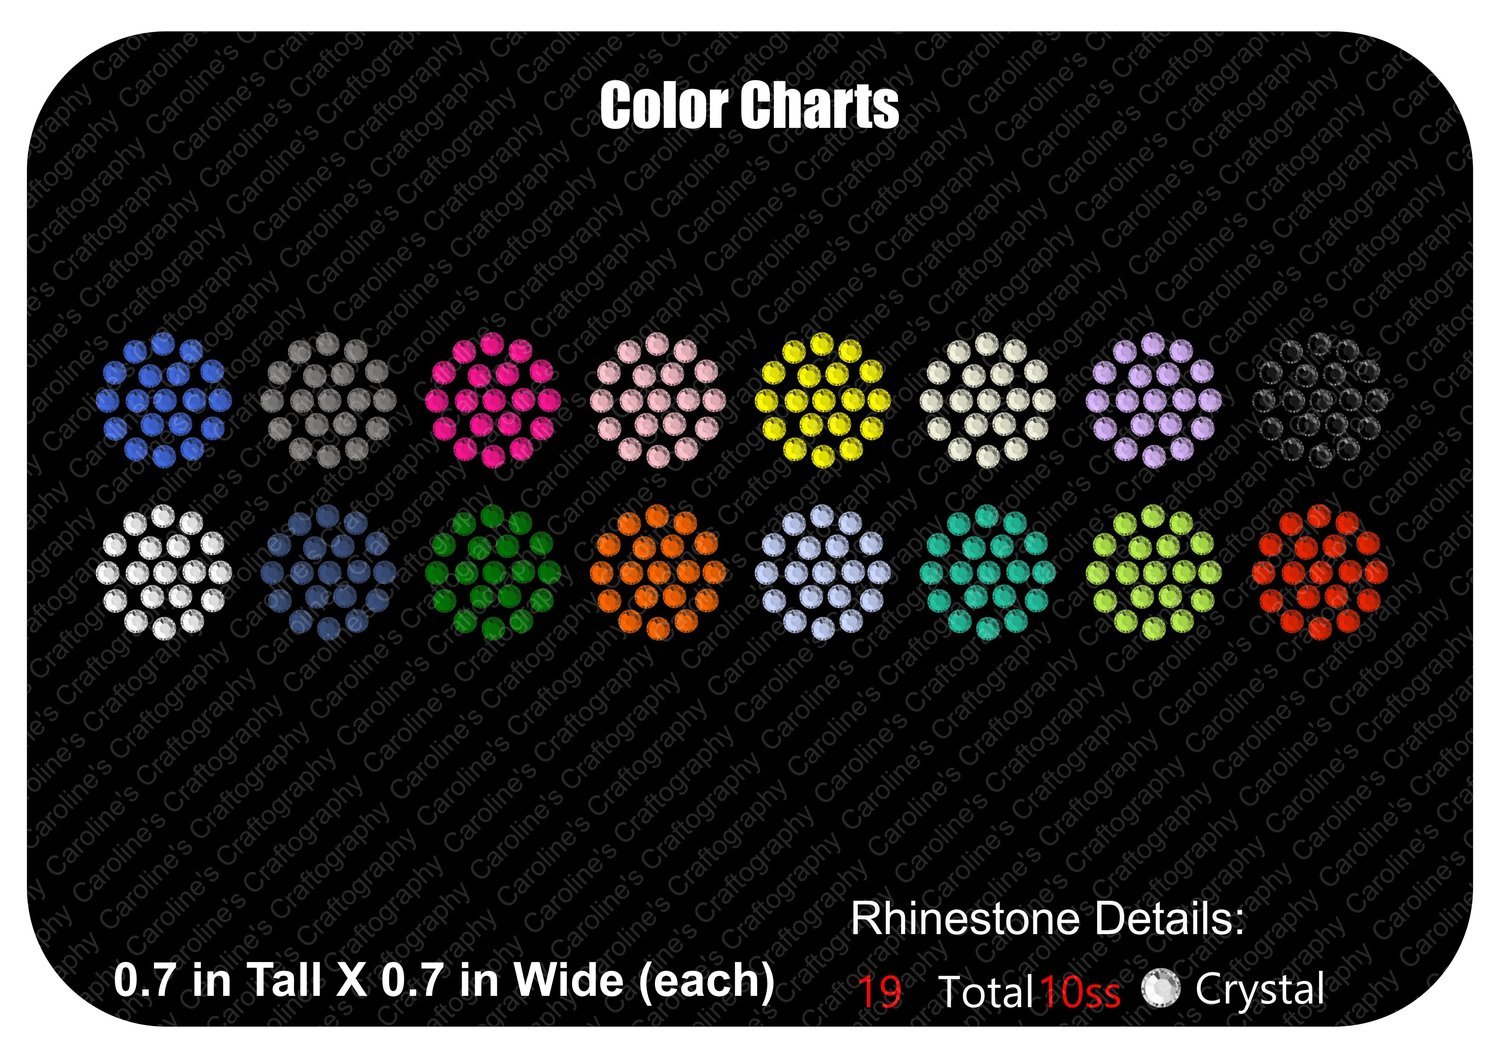 Rhinestone/Rhinestud Color Charts